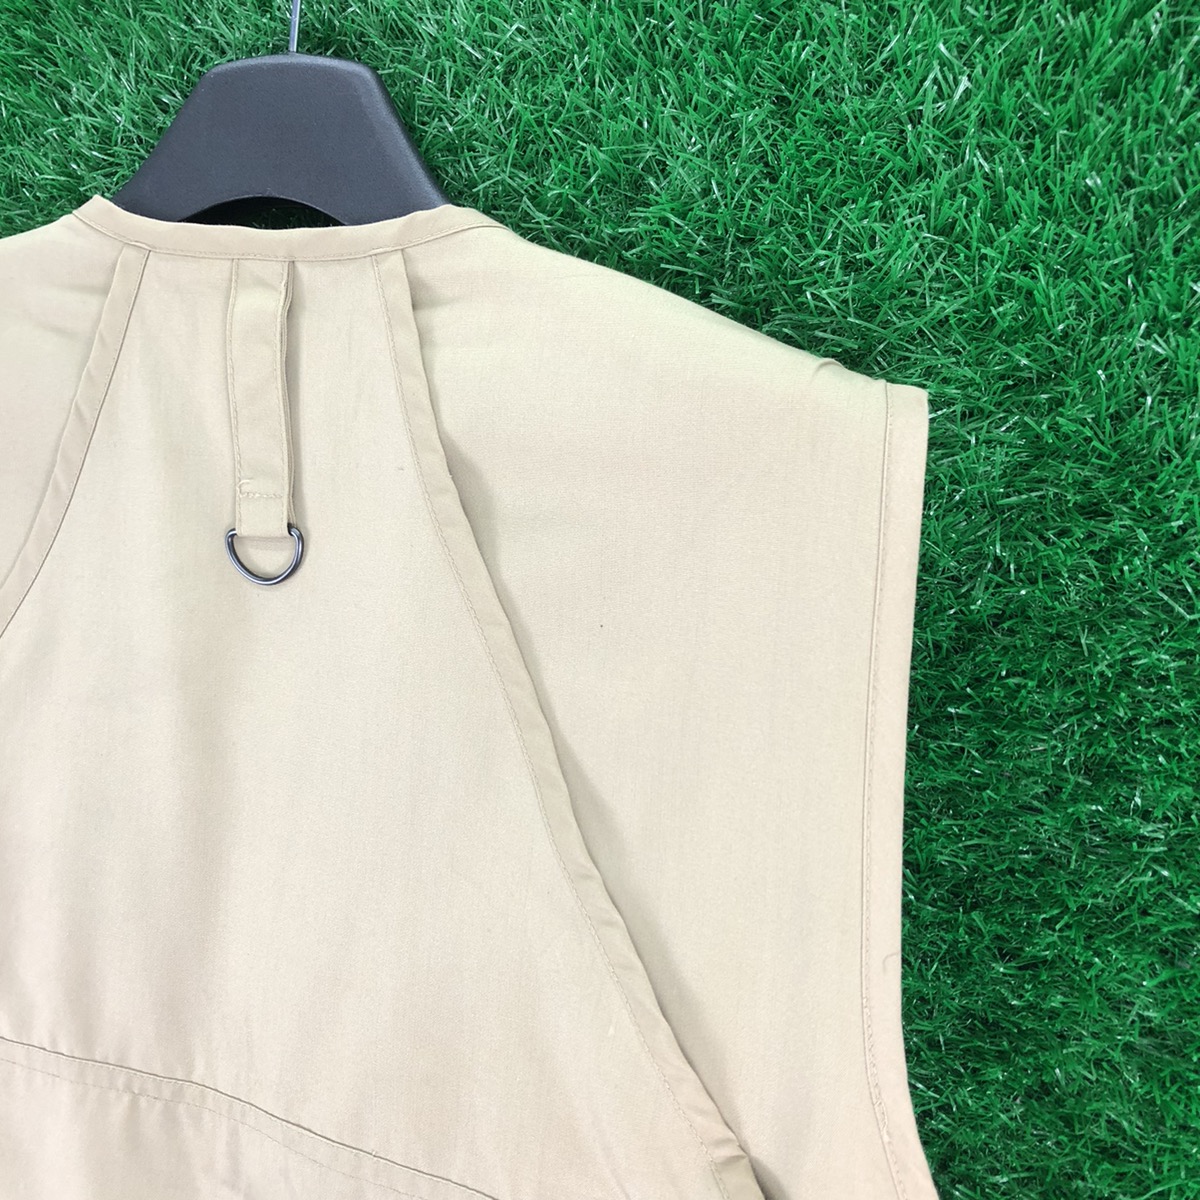 Vintage - Vintage Vest Multi Pocket Original Fishing Wear by GETT